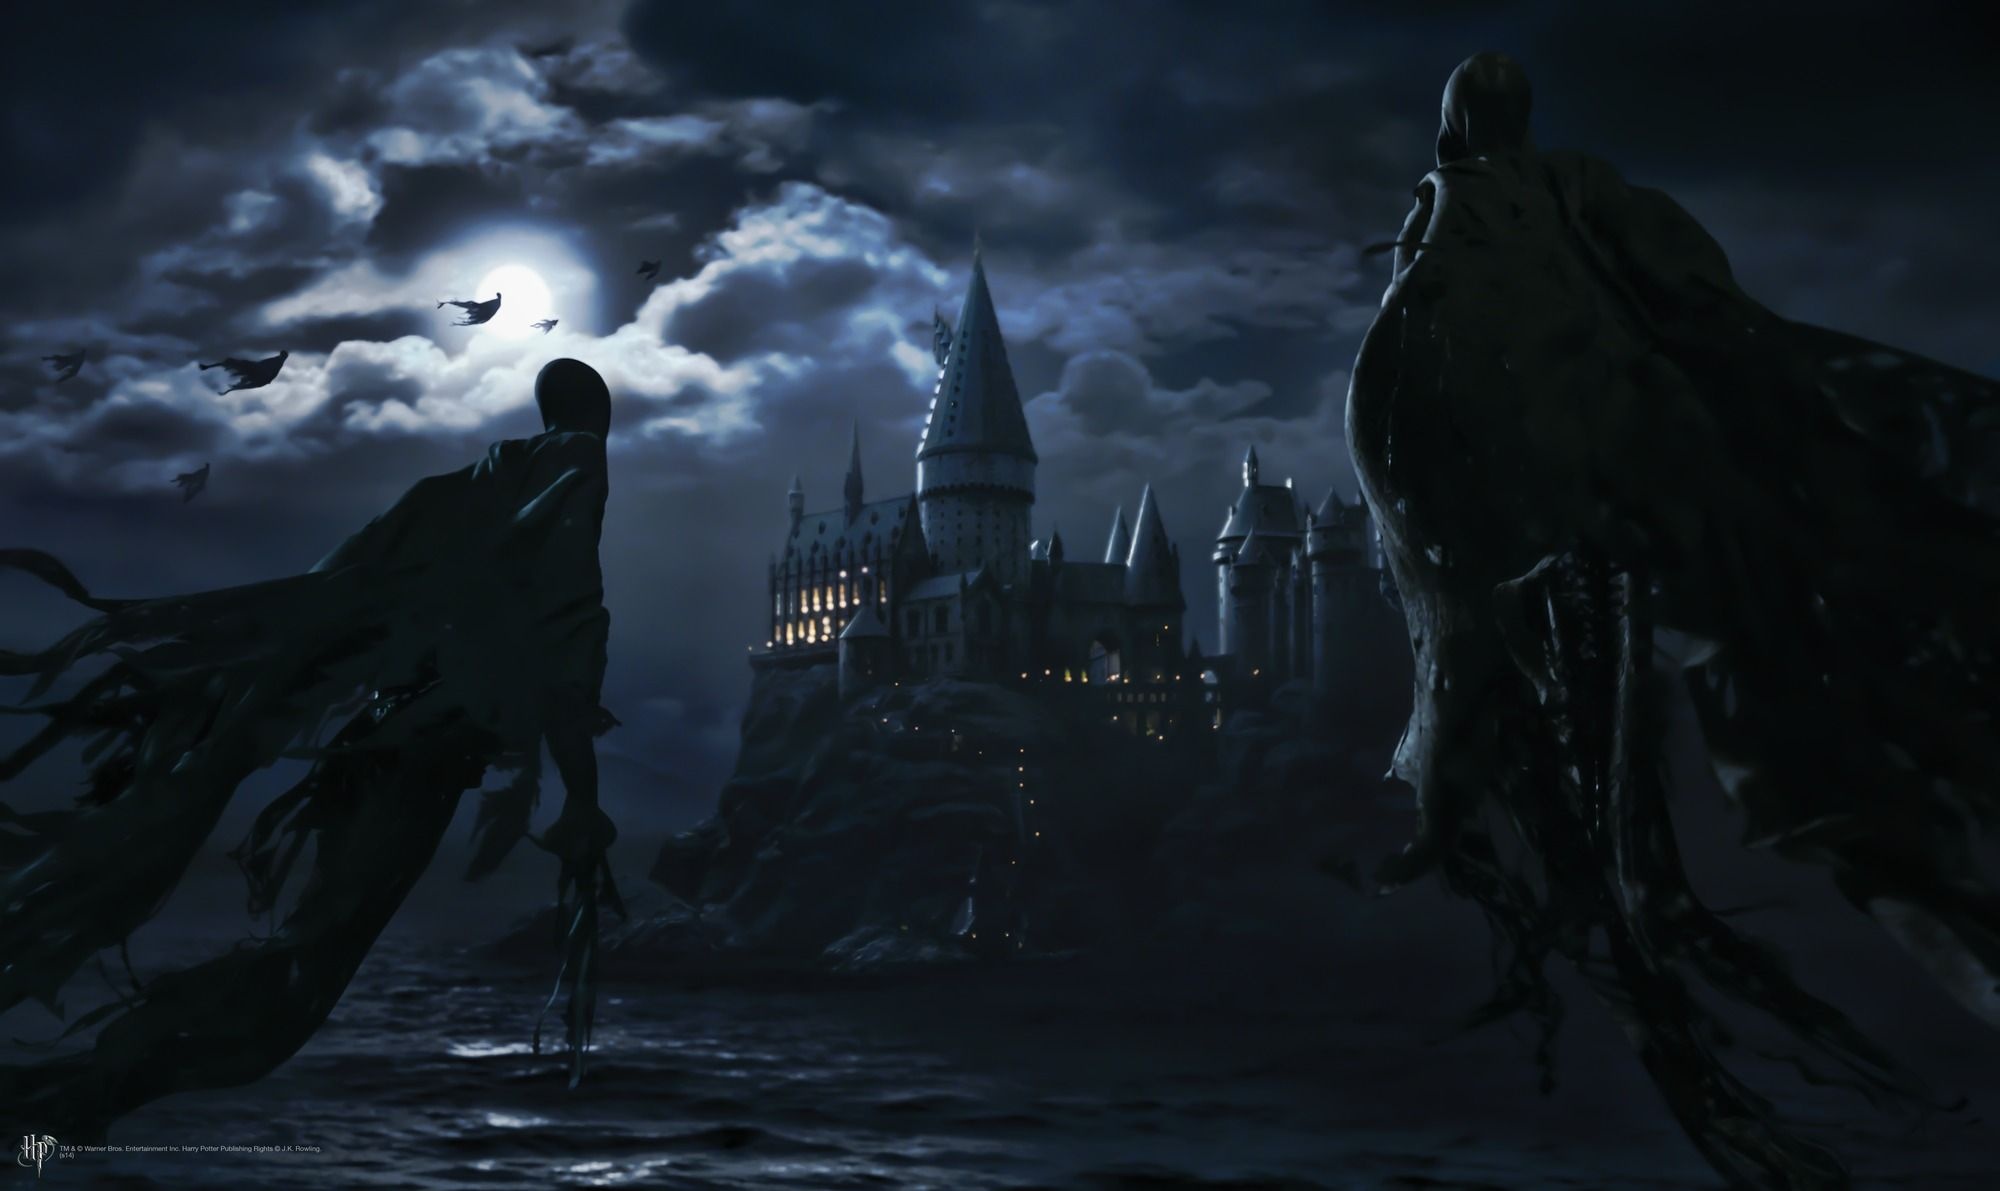 Dementors wallpaper delight, Chilling Harry Potter creatures, Dark magic encounters, Hogwarts mystery, 2000x1200 HD Desktop